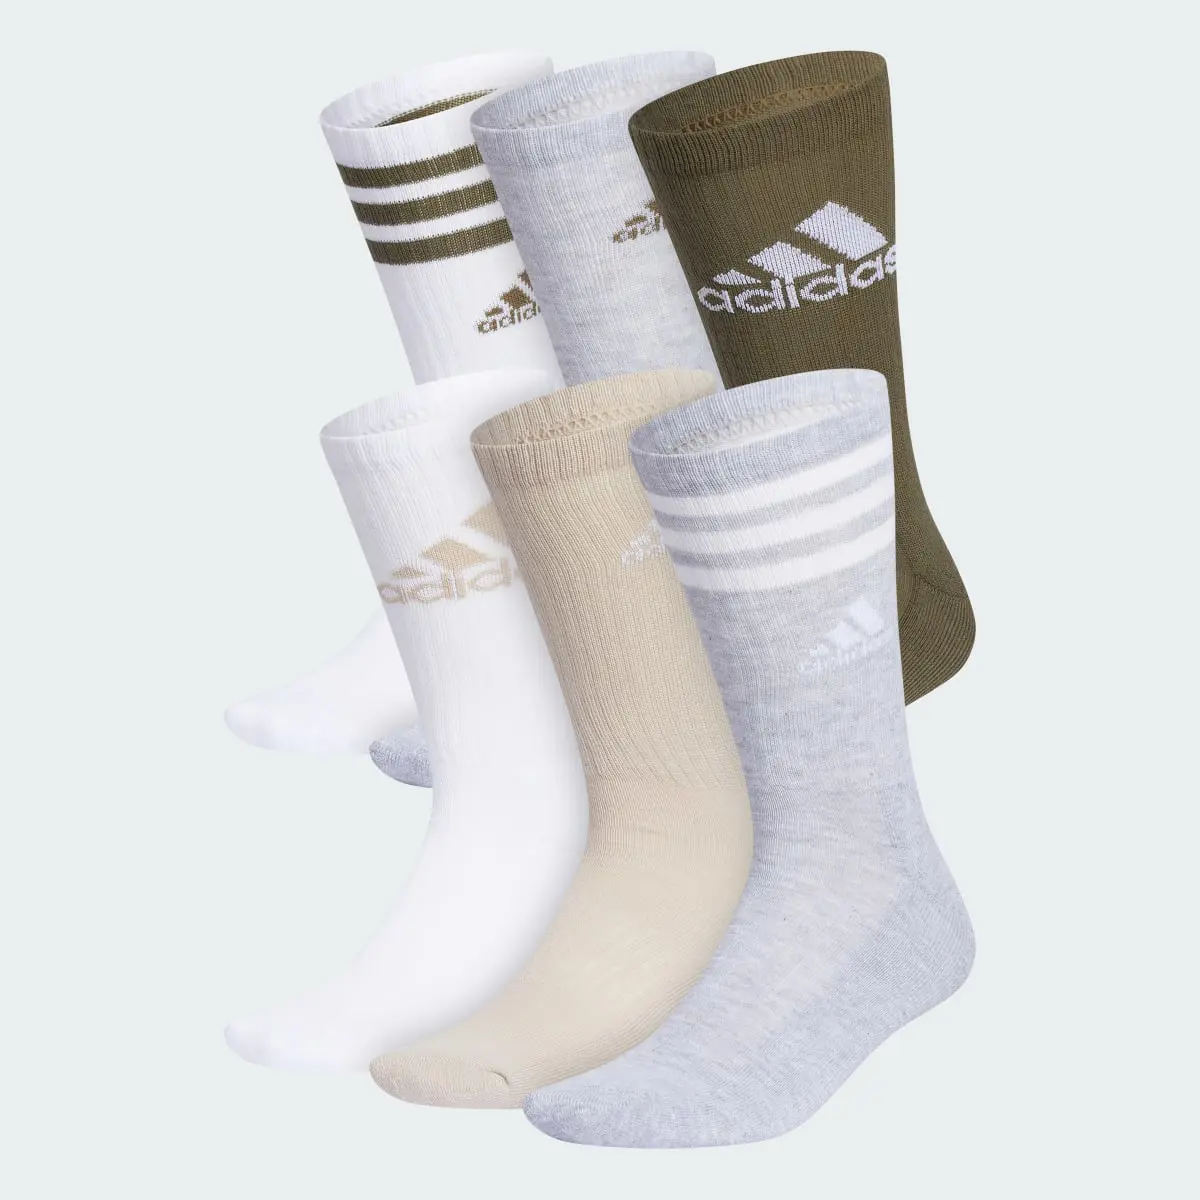 Adidas Cushioned Mixed Crew Socks 6 Pairs. 1